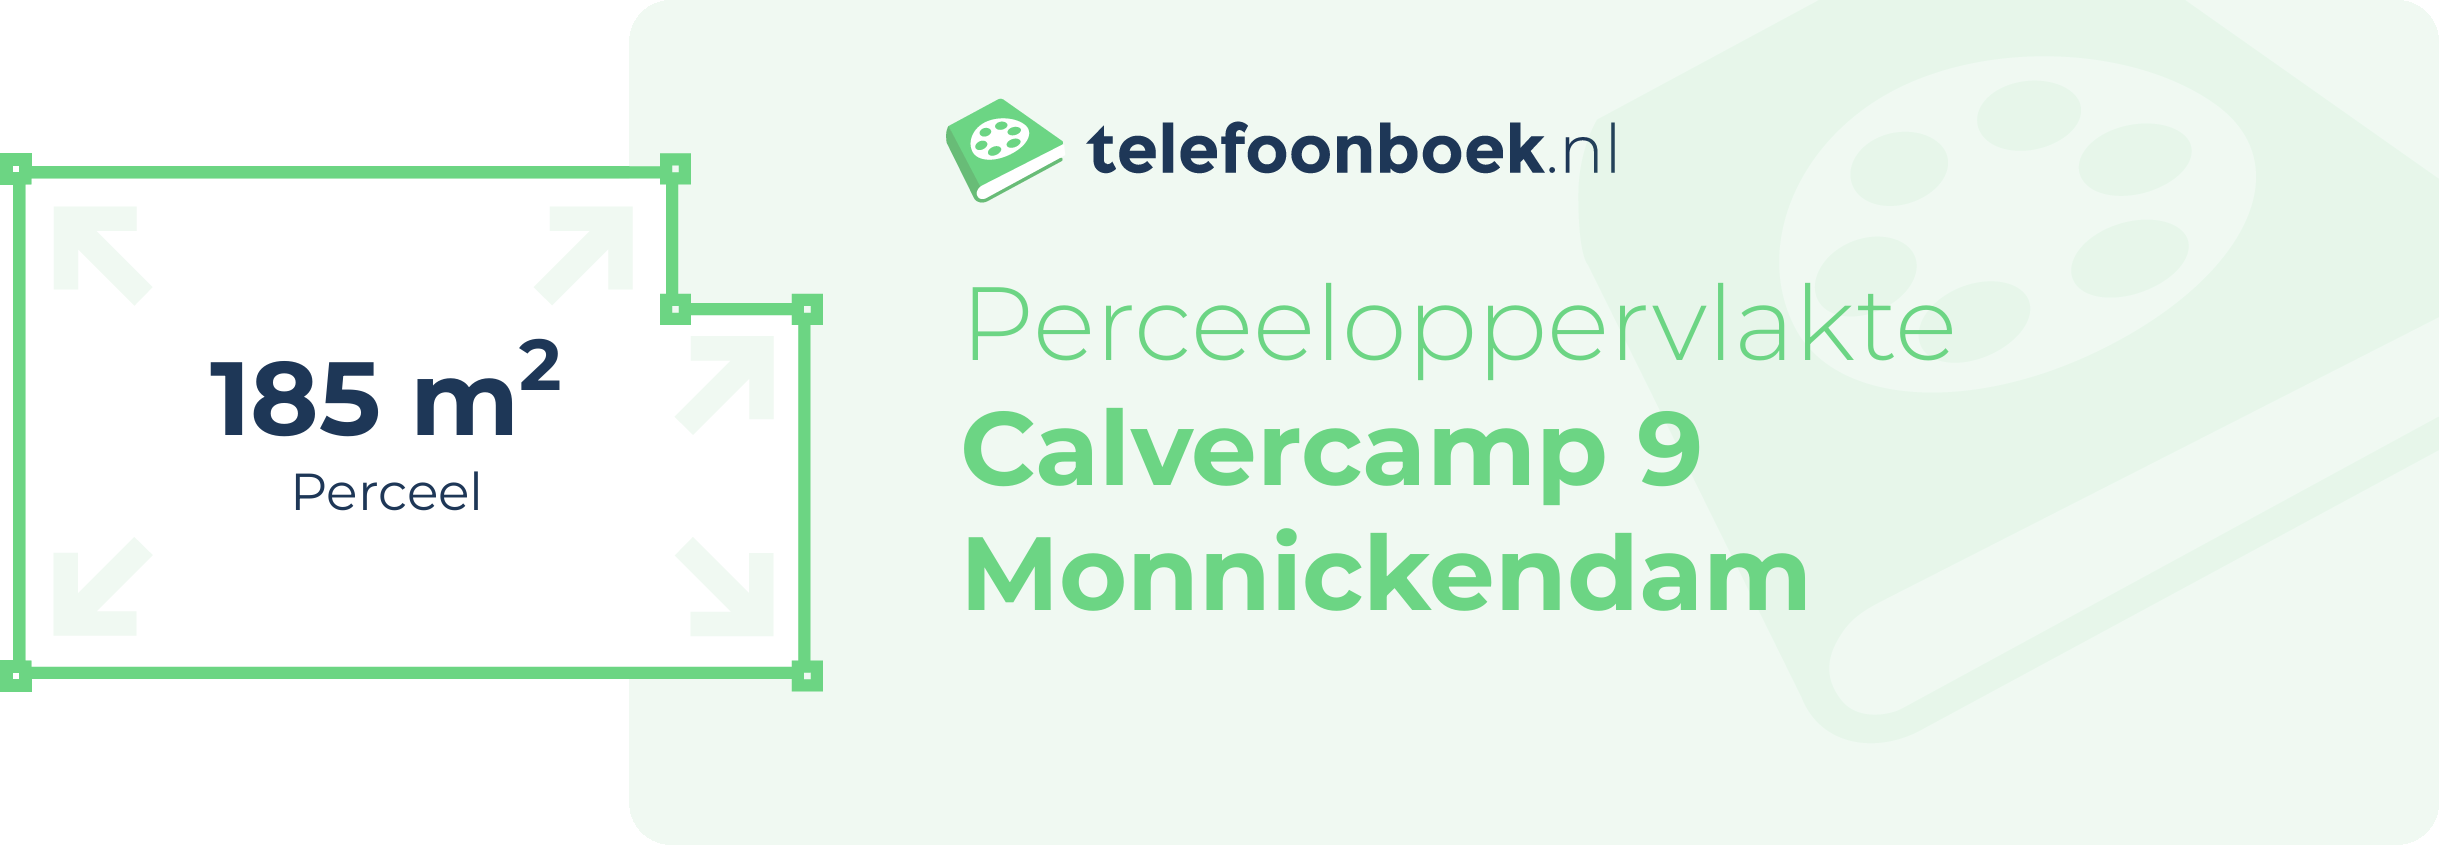 Perceeloppervlakte Calvercamp 9 Monnickendam